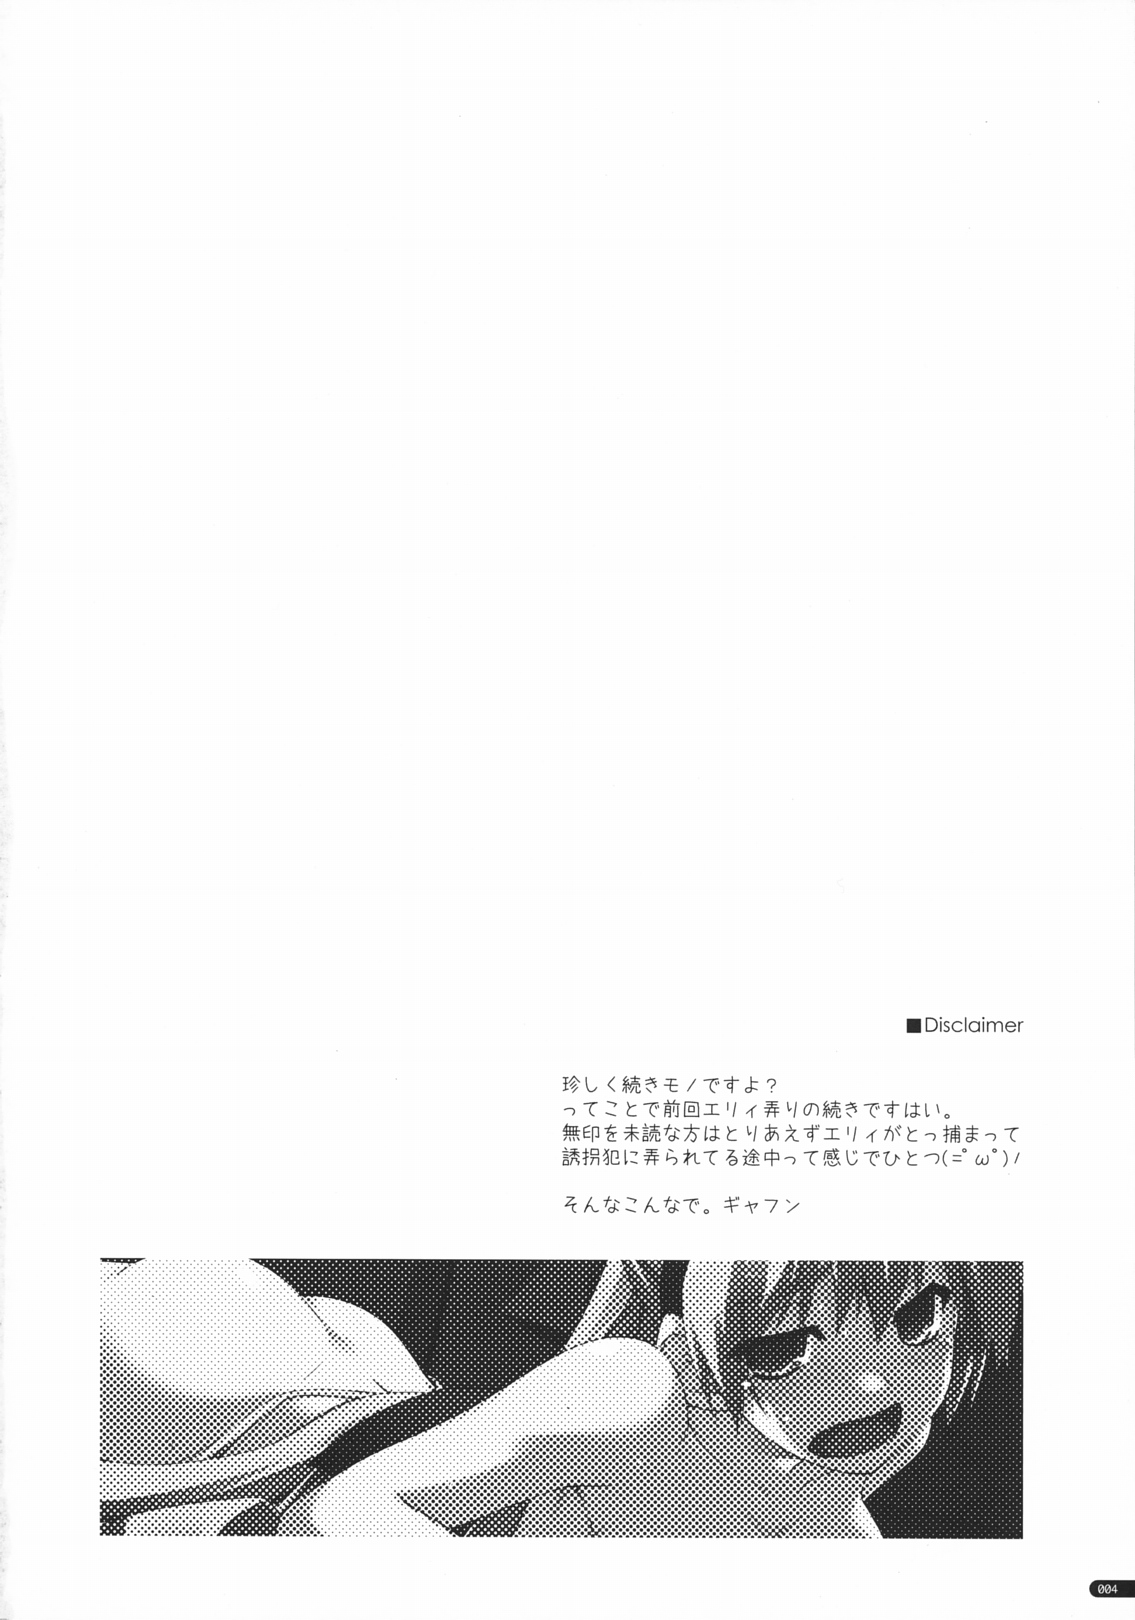 (COMIC1☆5) [ANGYADOW] Elie Ijiri 2 (The Legend of Heroes Zero no Kiseki) (COMIC1☆5) [行脚堂] エリィ弄り2 (英雄伝説 零の軌跡)